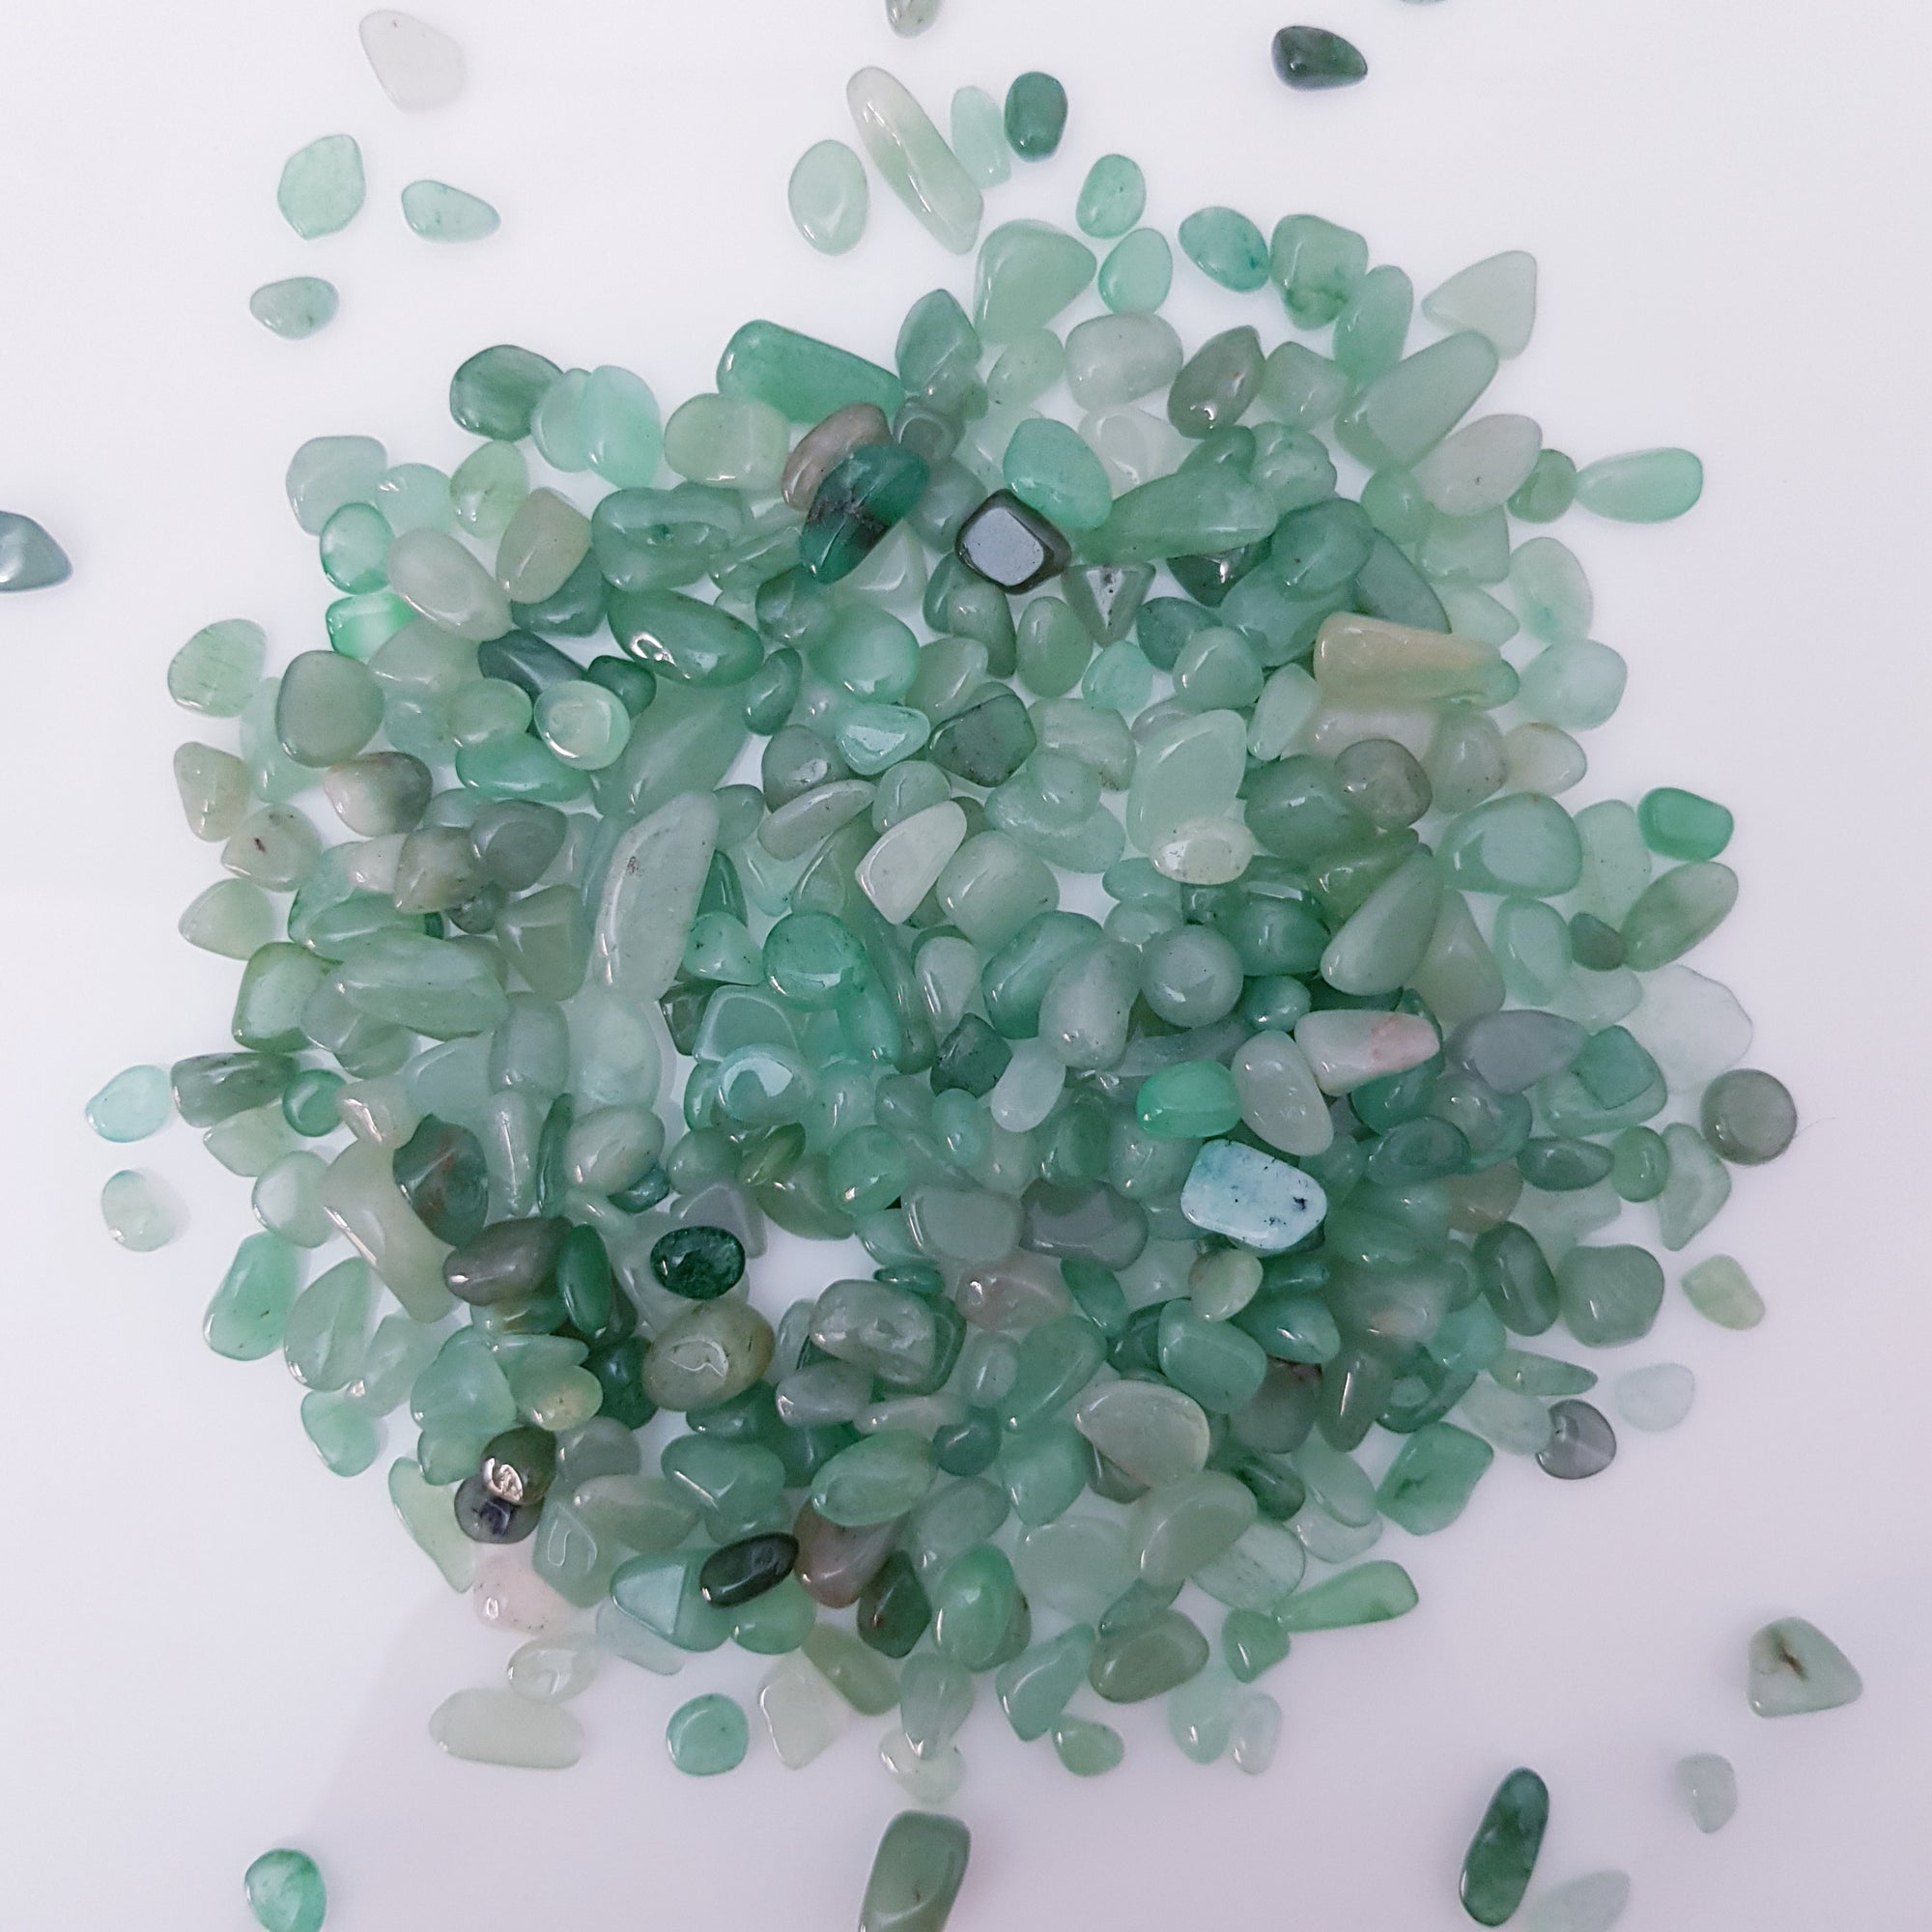 Green aventurine crystal chips 100g